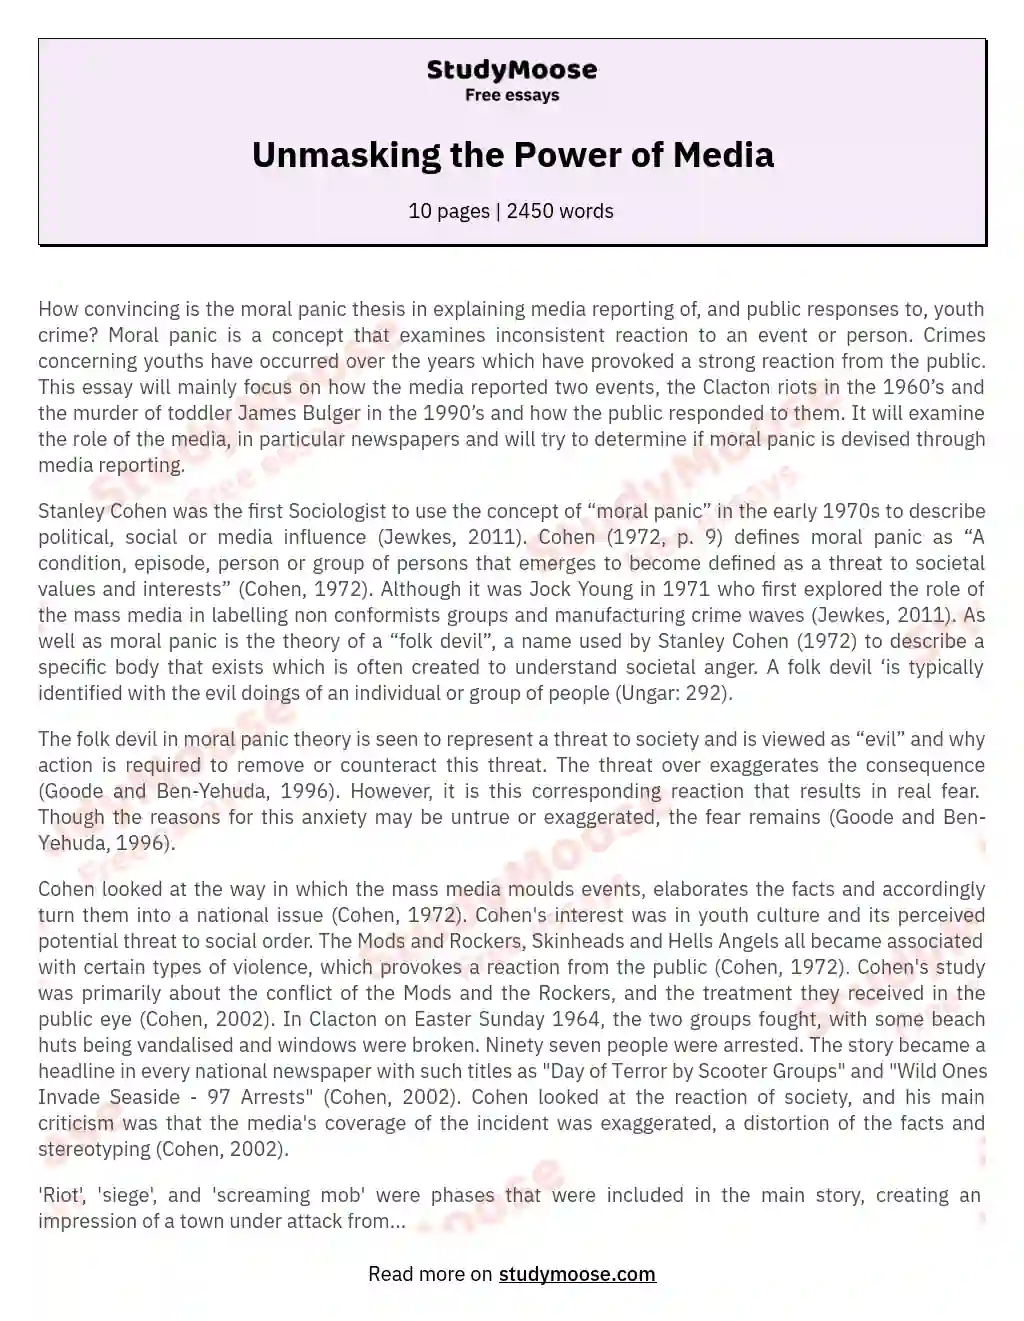 Unmasking the Power of Media essay